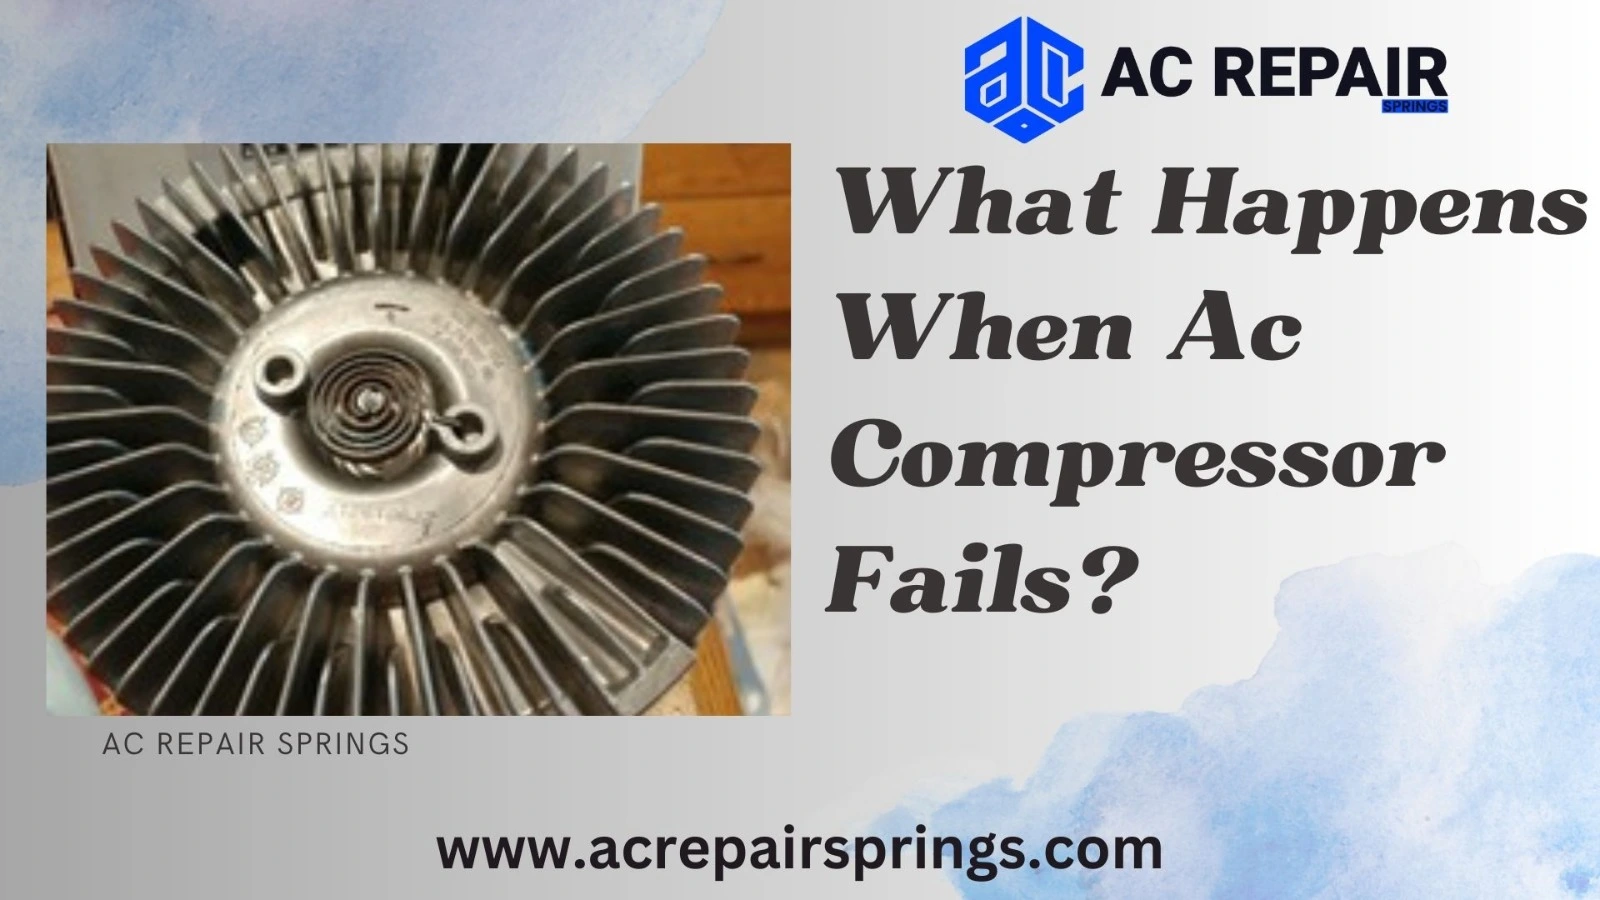 What Happens When Ac Compressor Fails?